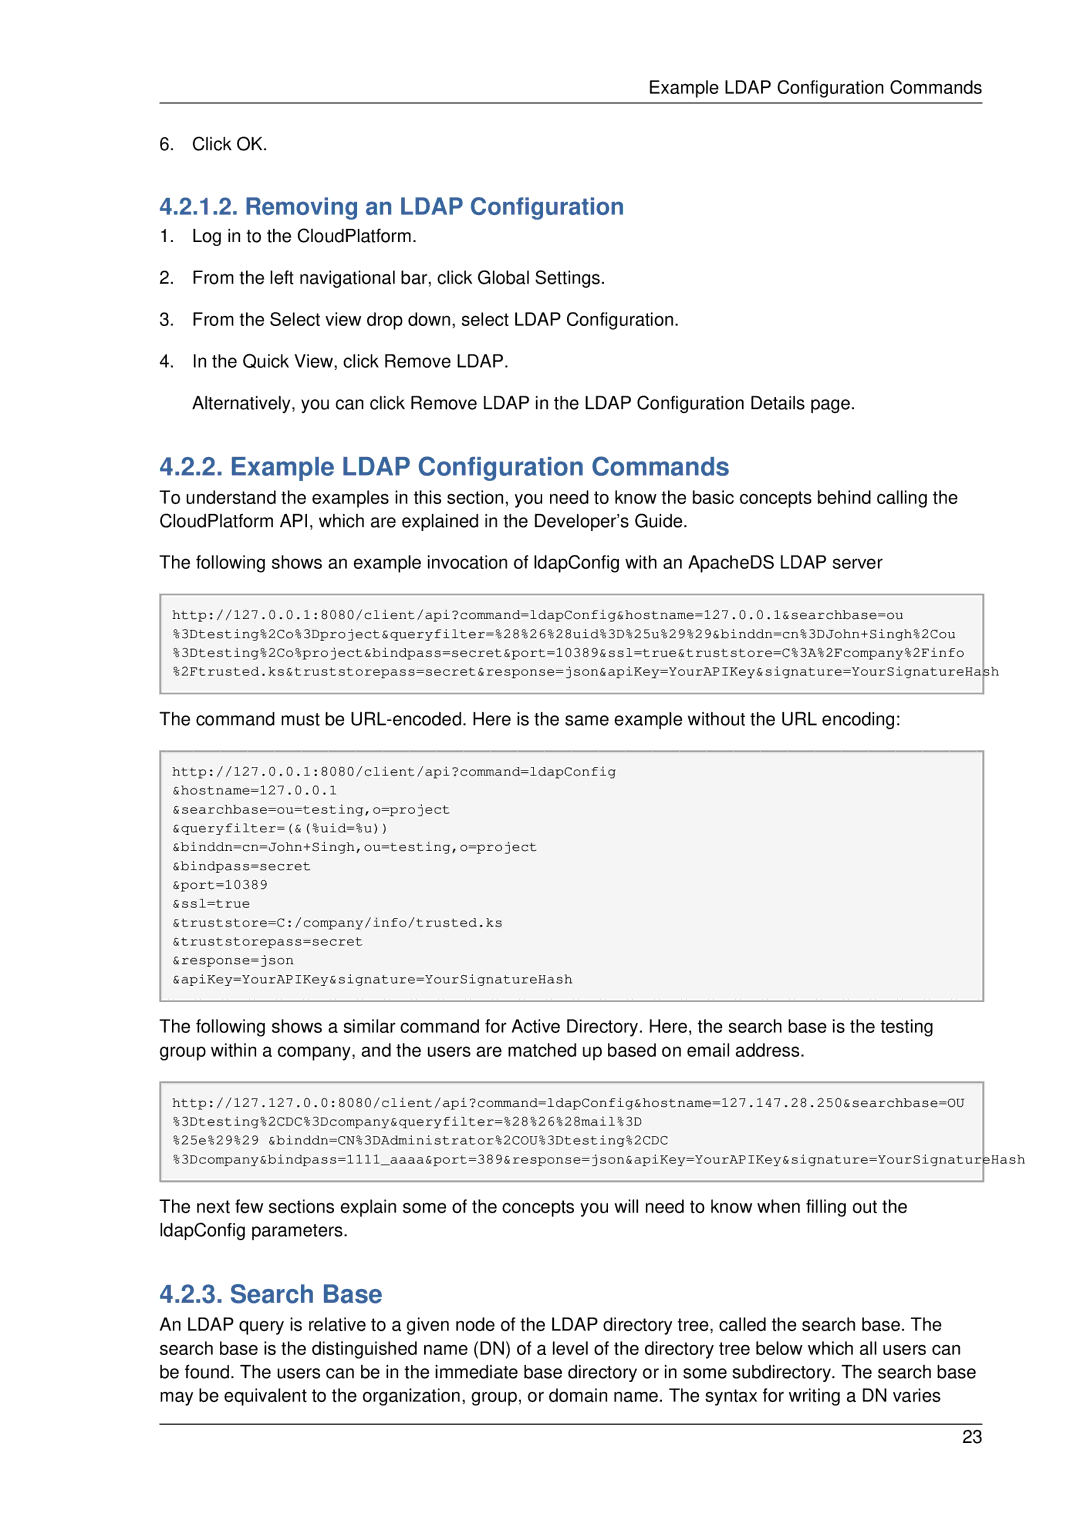 Citrix Systems 4.2 manual Example Ldap Configuration Commands, Search Base, Removing an Ldap Configuration 